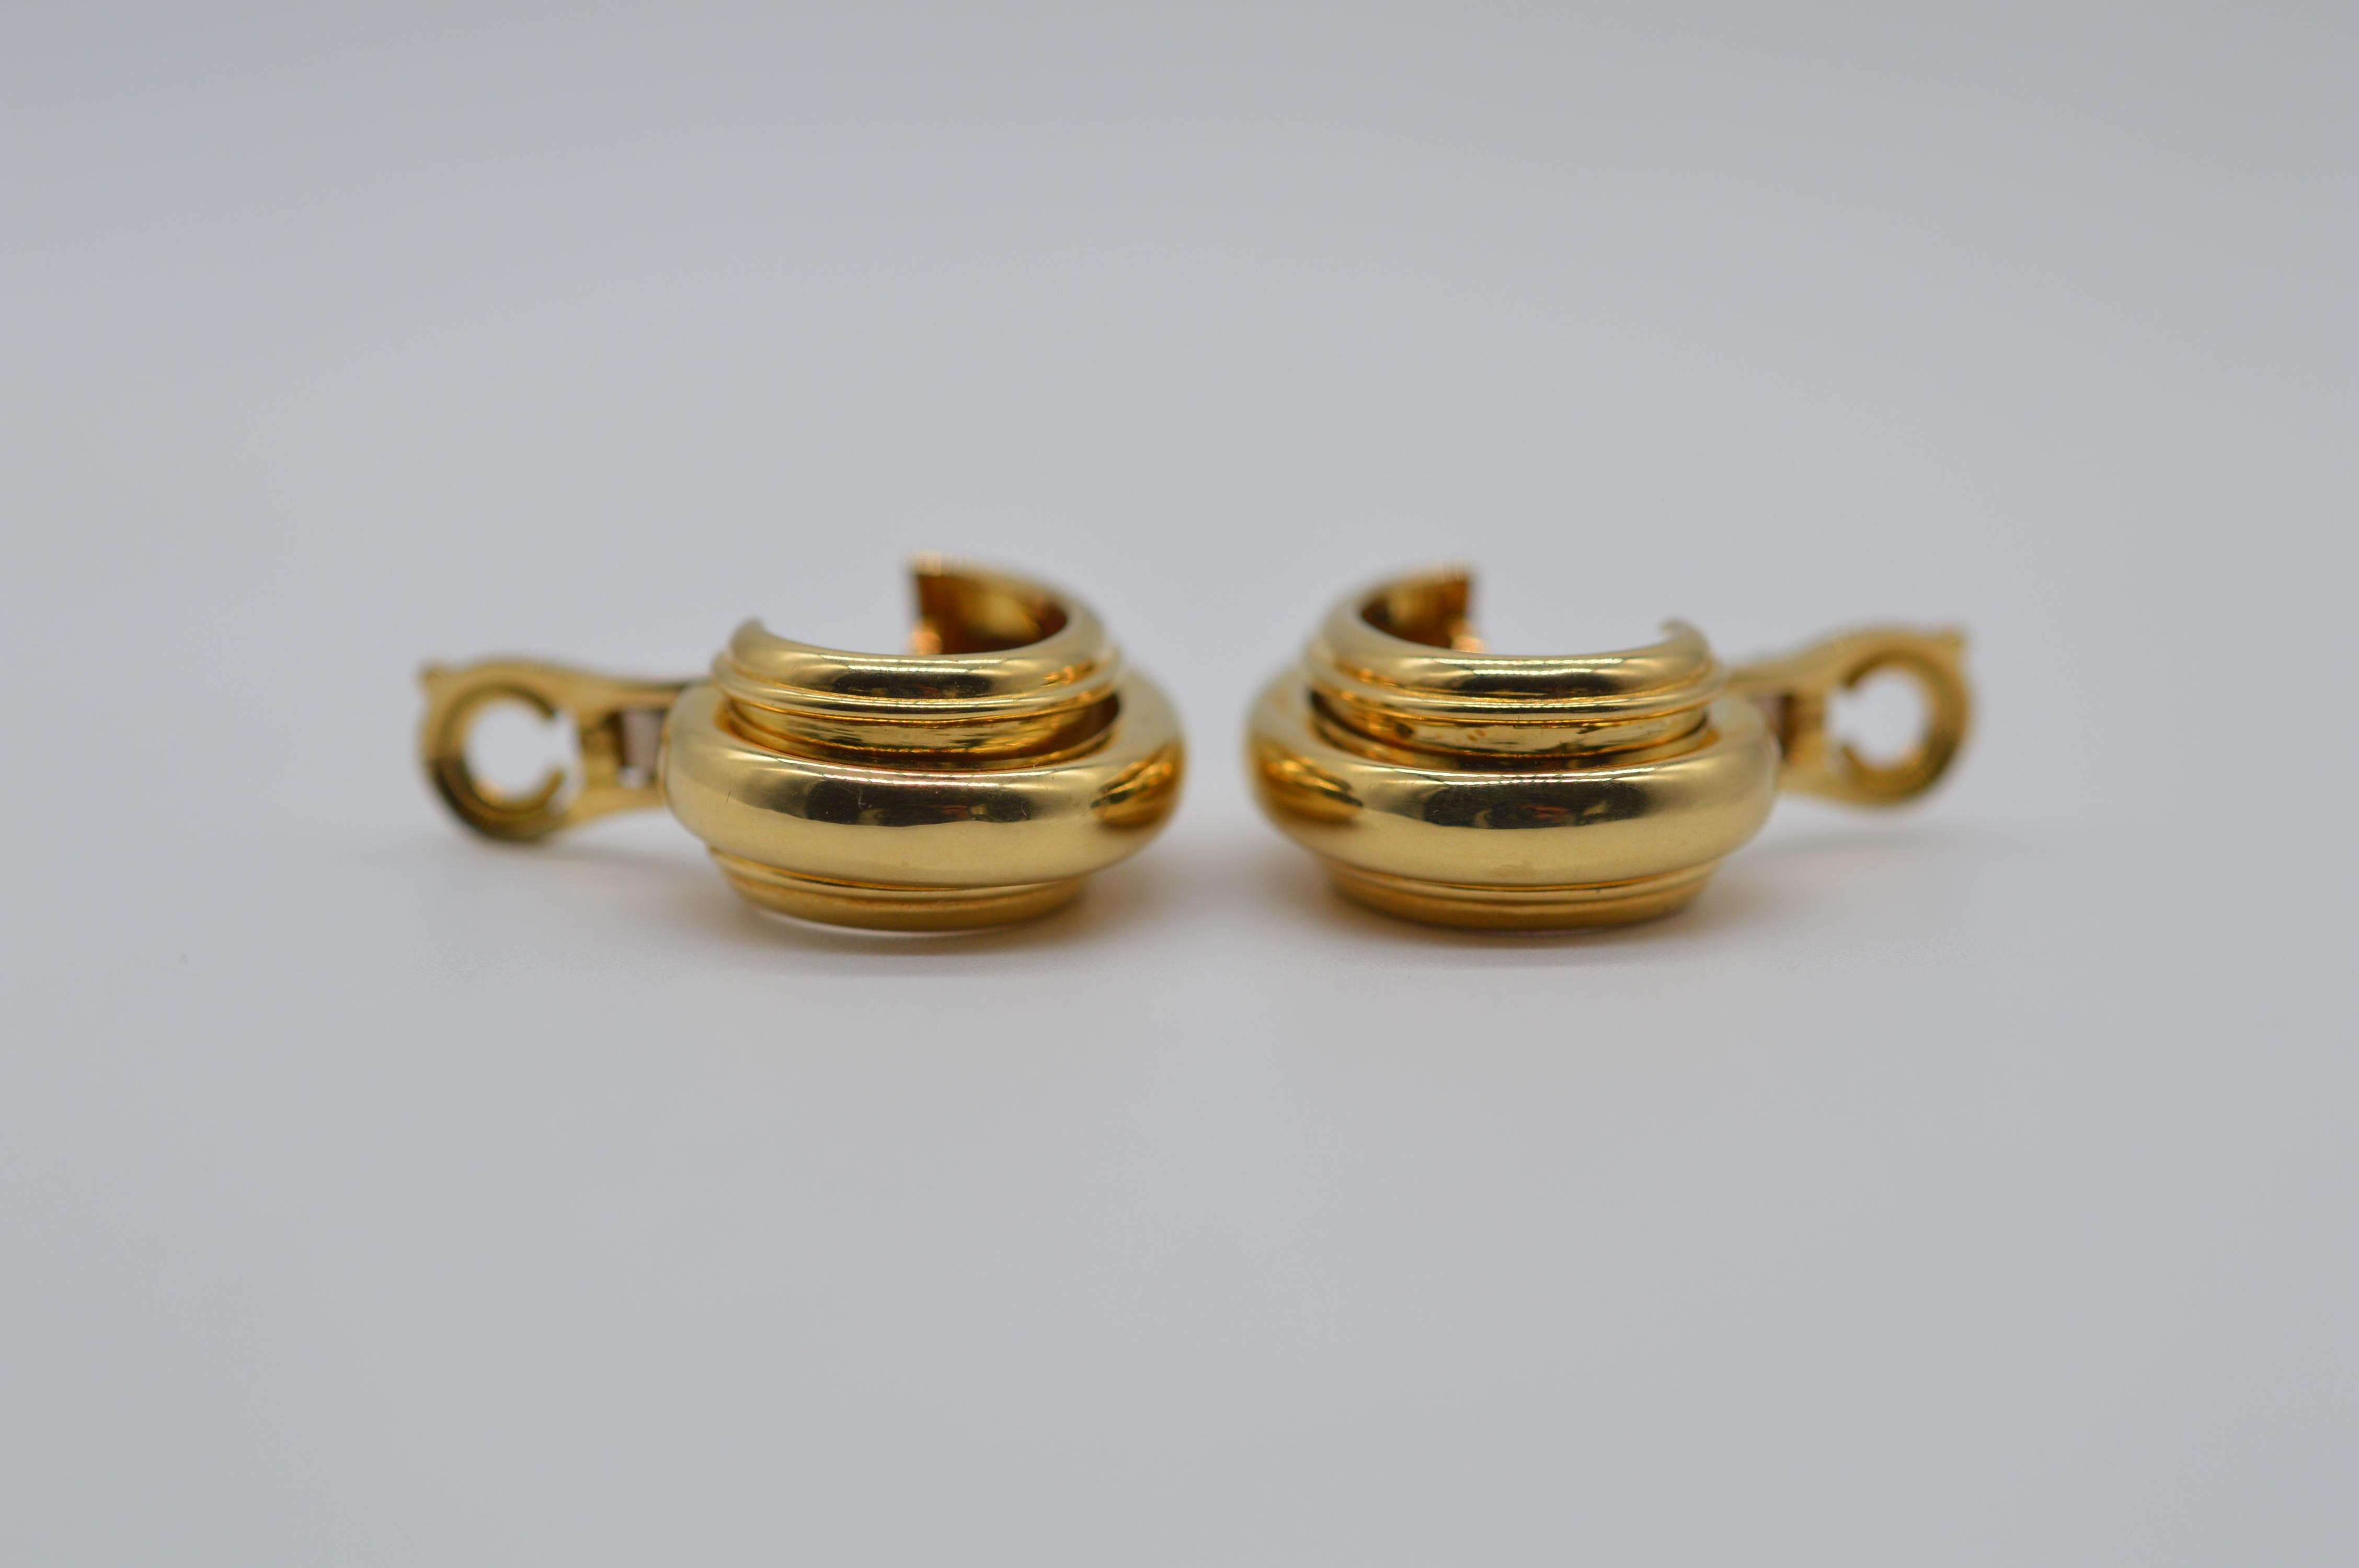 Piaget Possession Earrings in 18K Yellow Gold Unworn For Sale 1